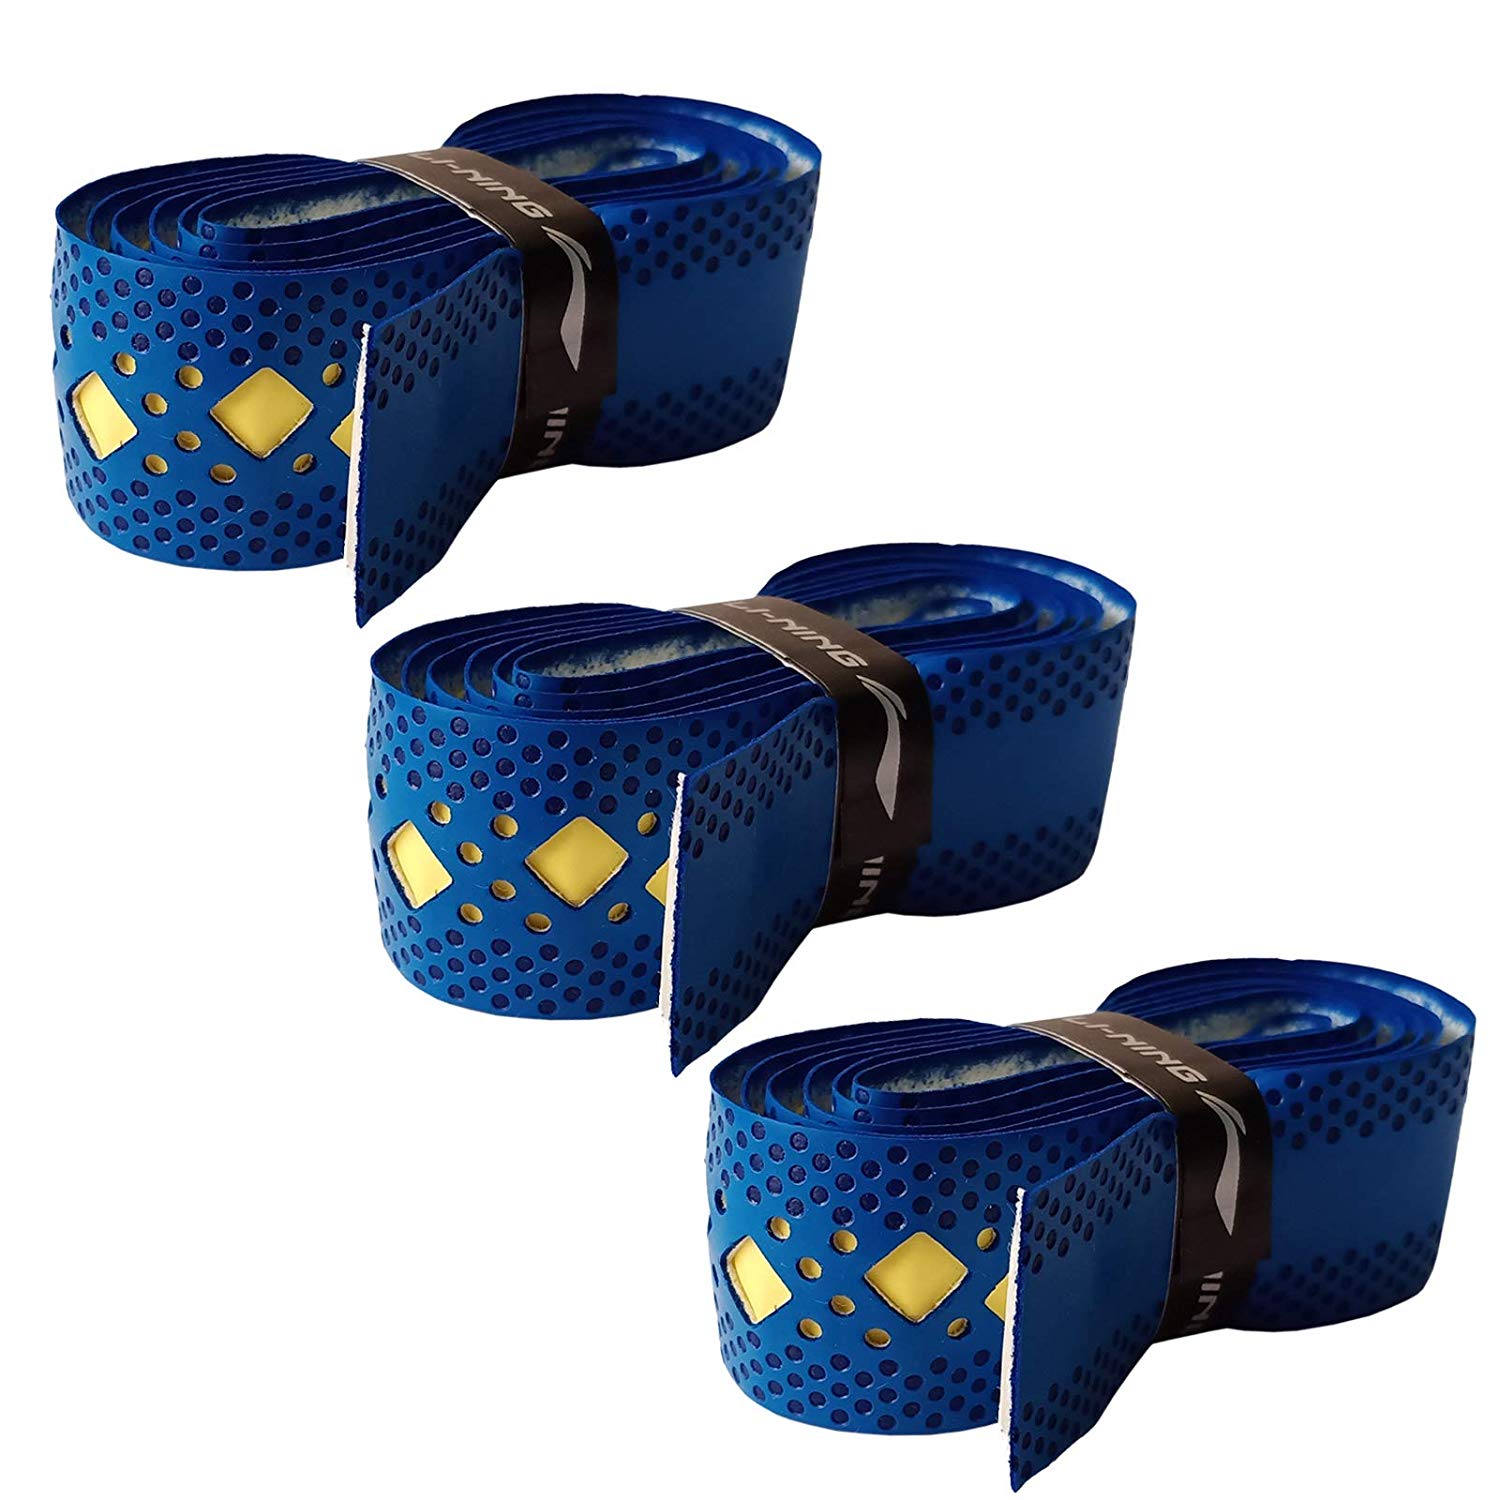 Li-Ning GP35 Badminton Dual Color Grip (Pack of3) - Blue - Best Price online Prokicksports.com